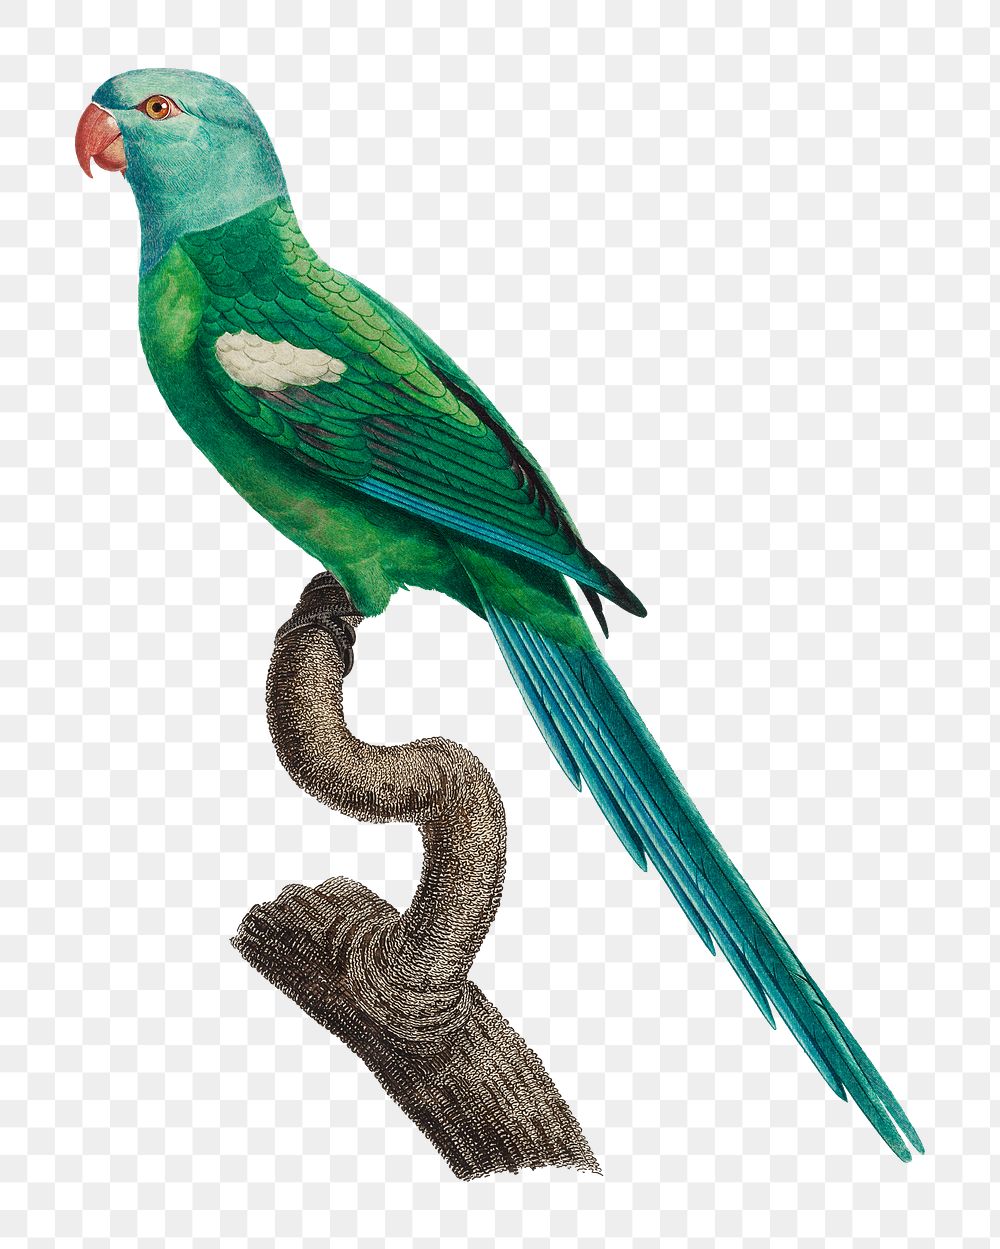 Yellow-shouldered Amazon parrot png bird sticker, vintage animal illustration, transparent background